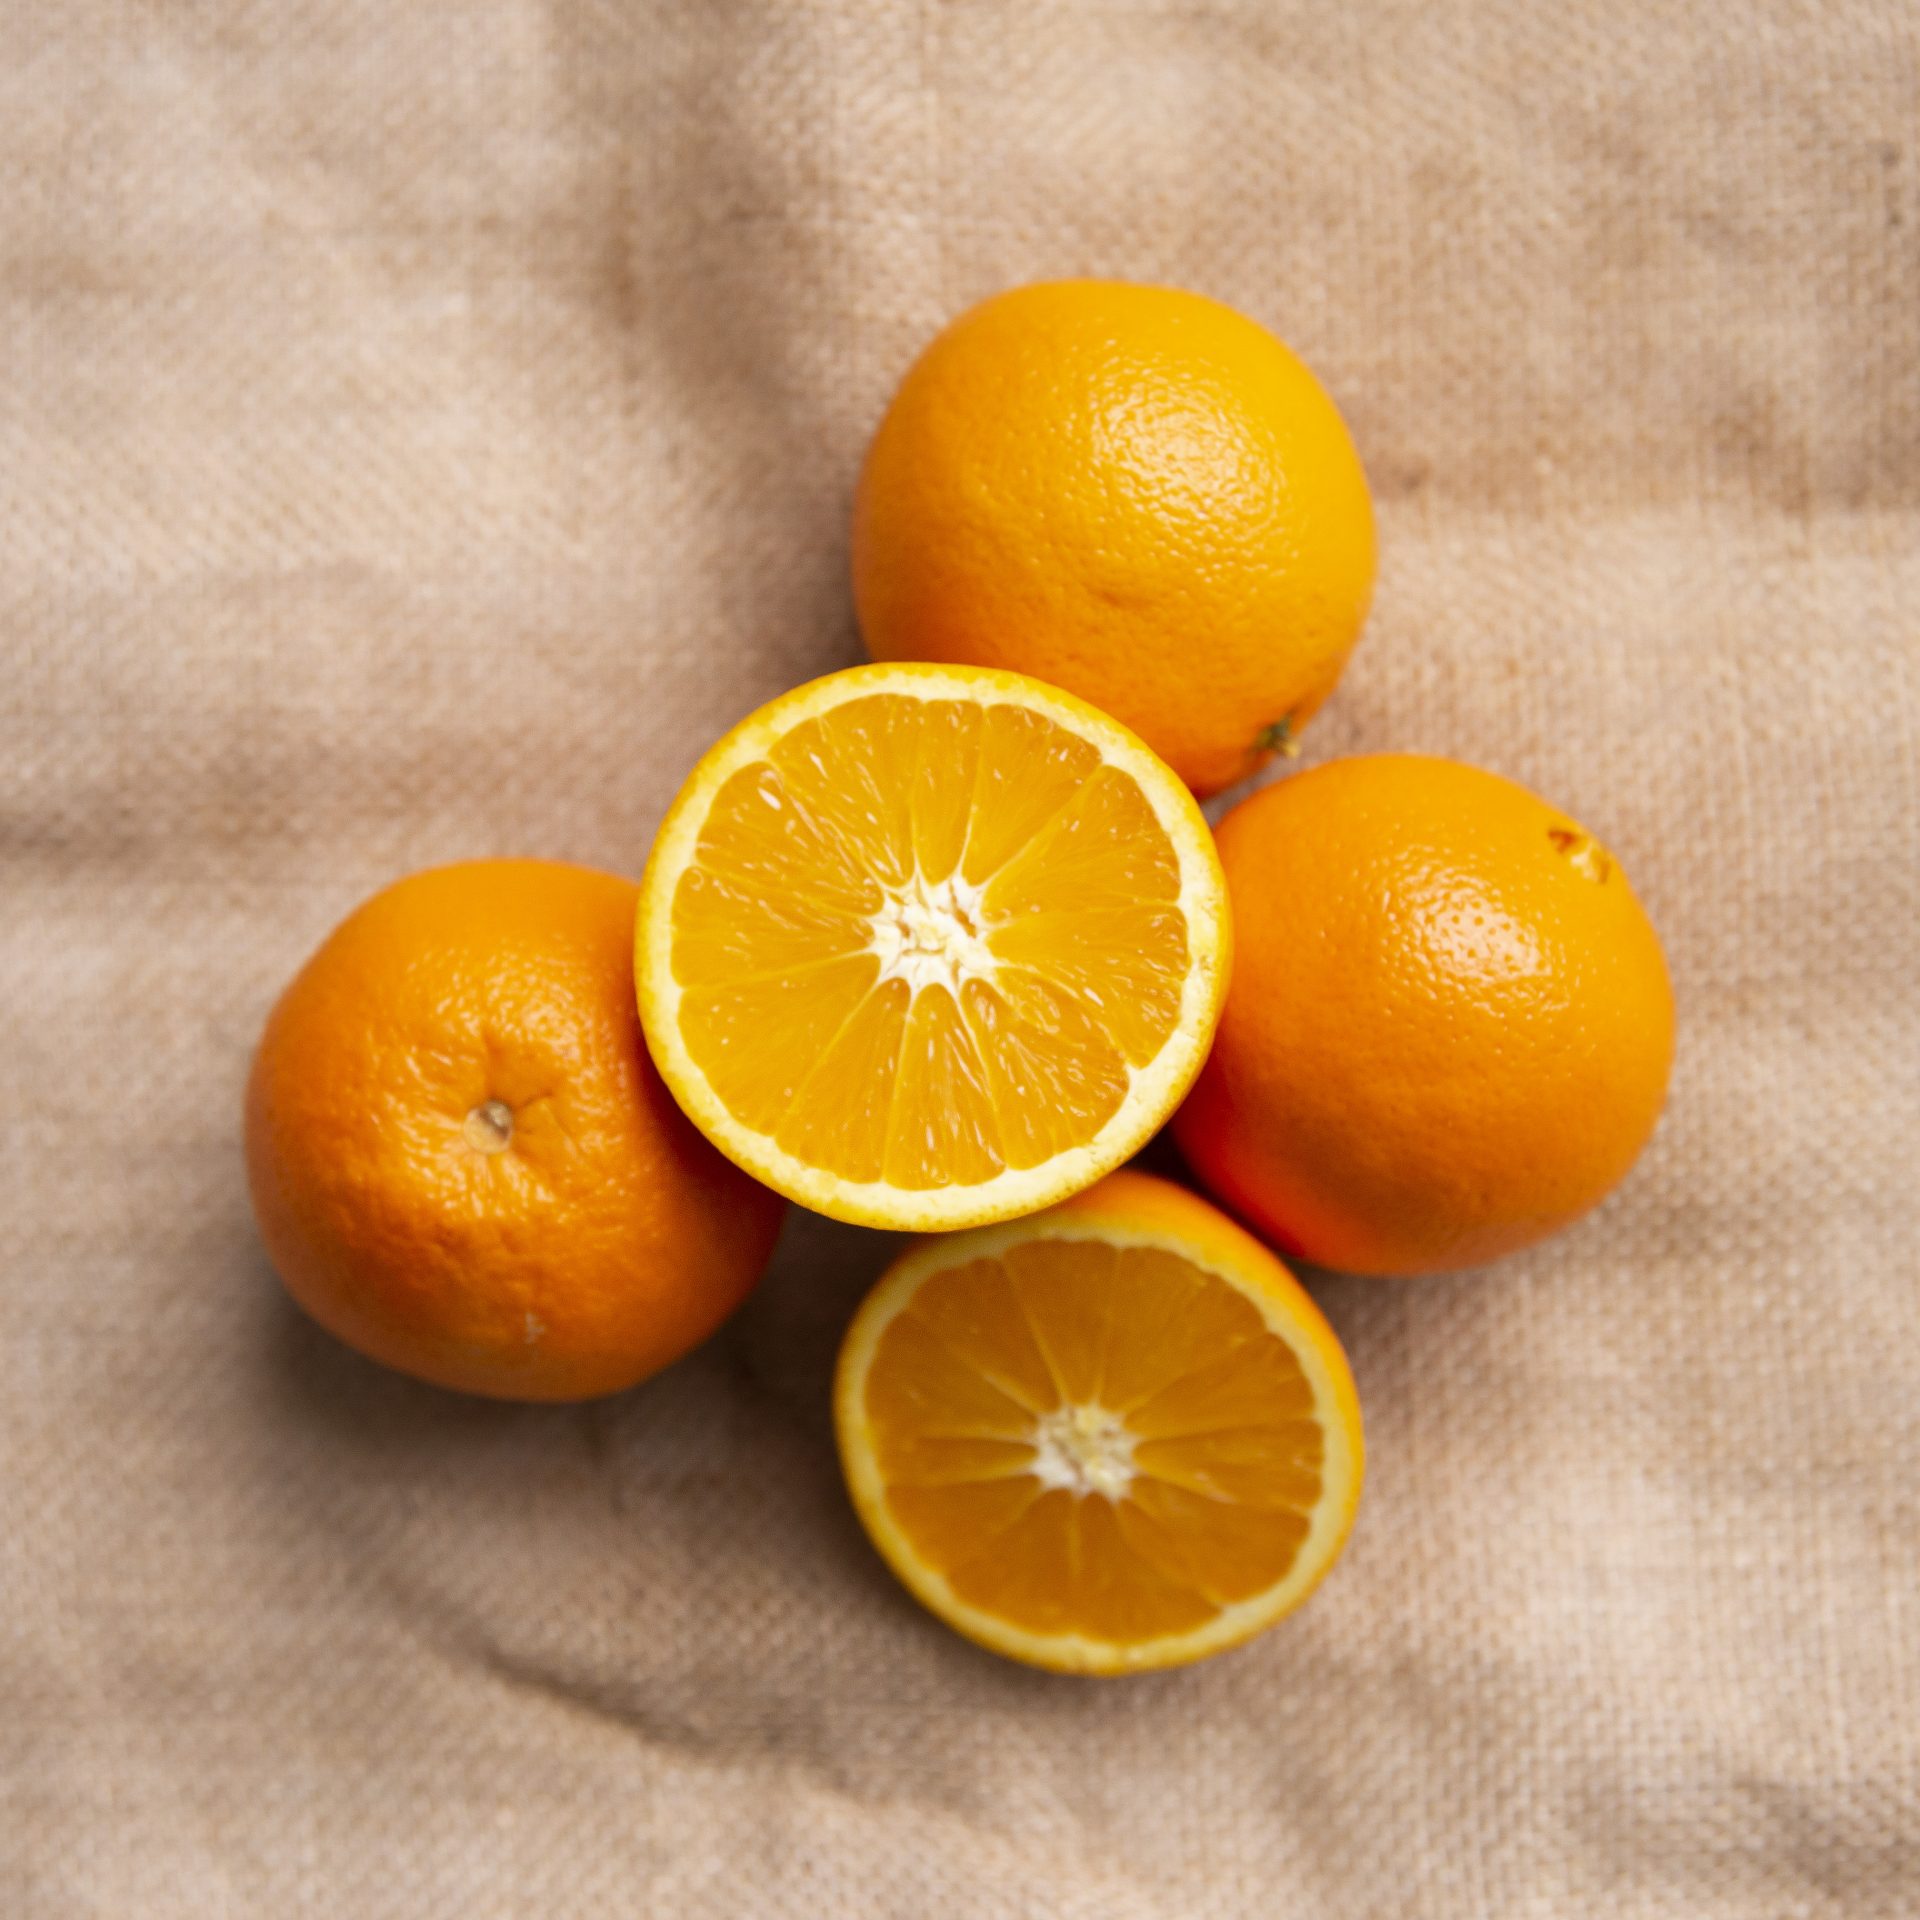 Orange Fruit Facts